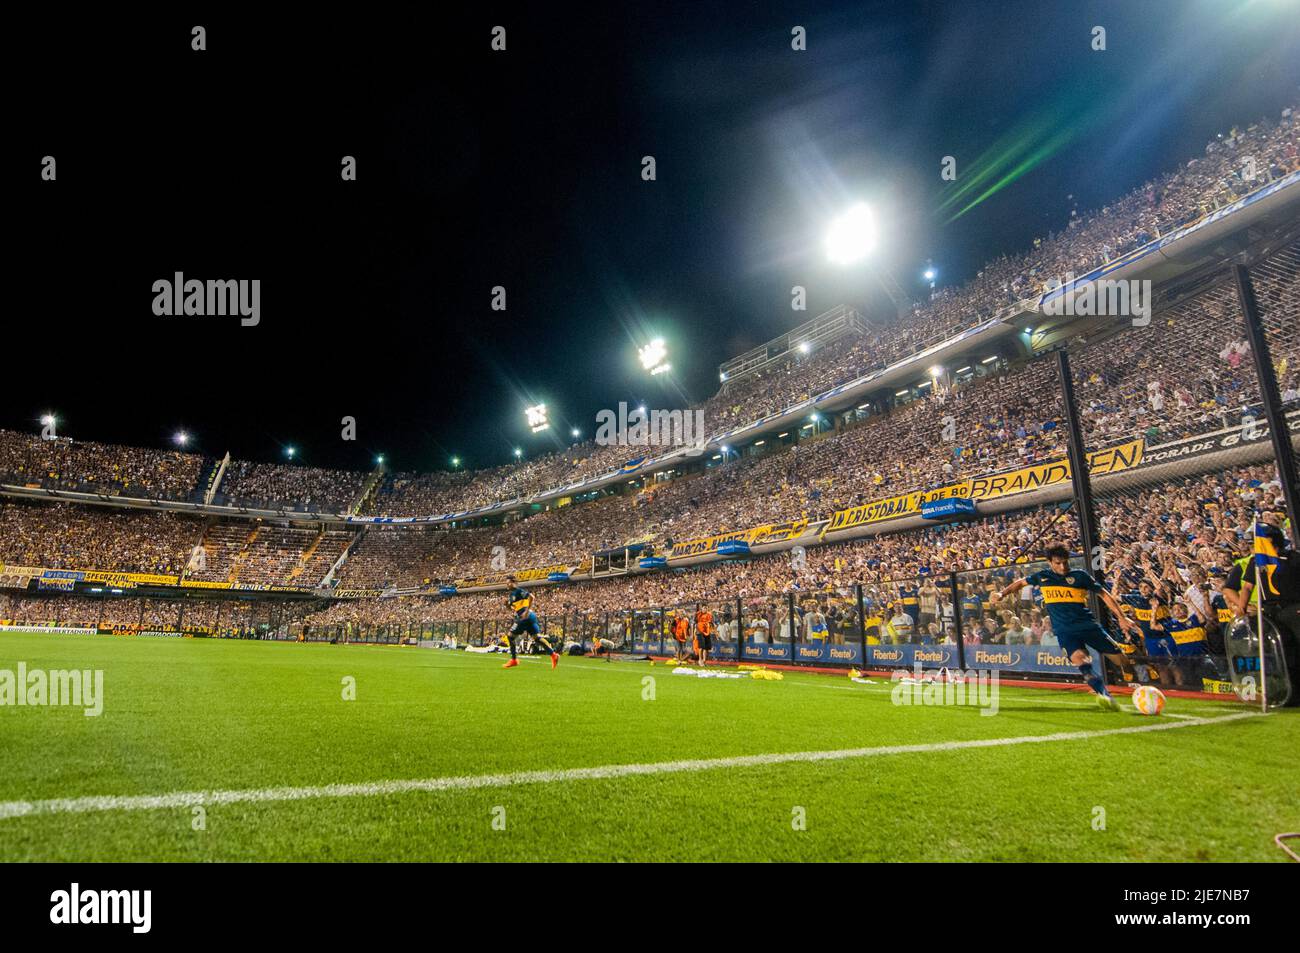 Full grandstands with Boca Juniors supporters at La Bombonera Stadium. Stock Photo